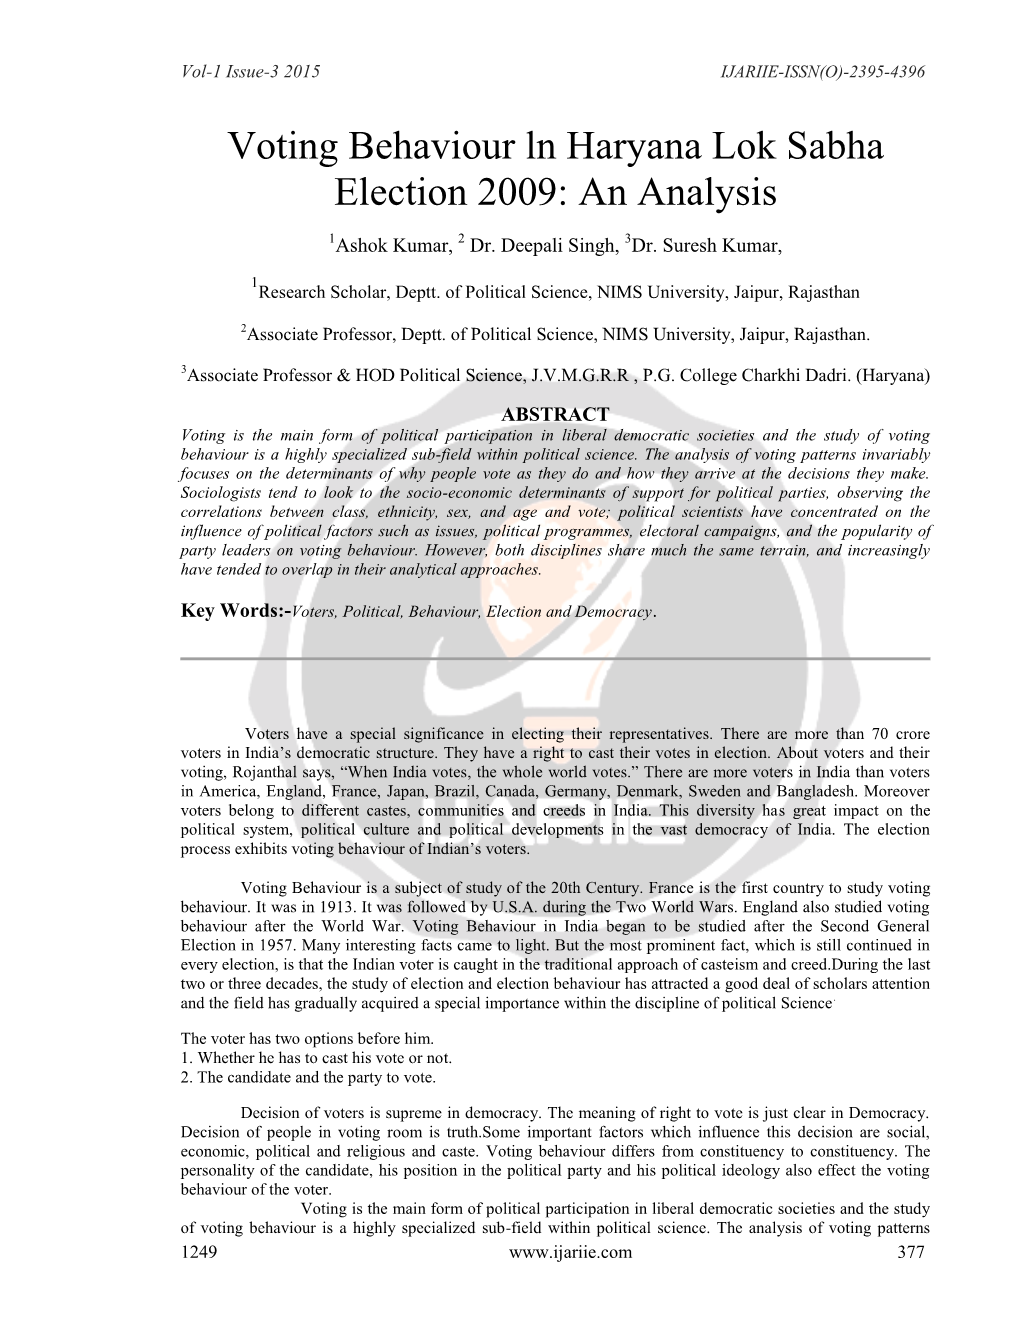 Voting Behaviour Ln Haryana Lok Sabha Election 2009: an Analysis